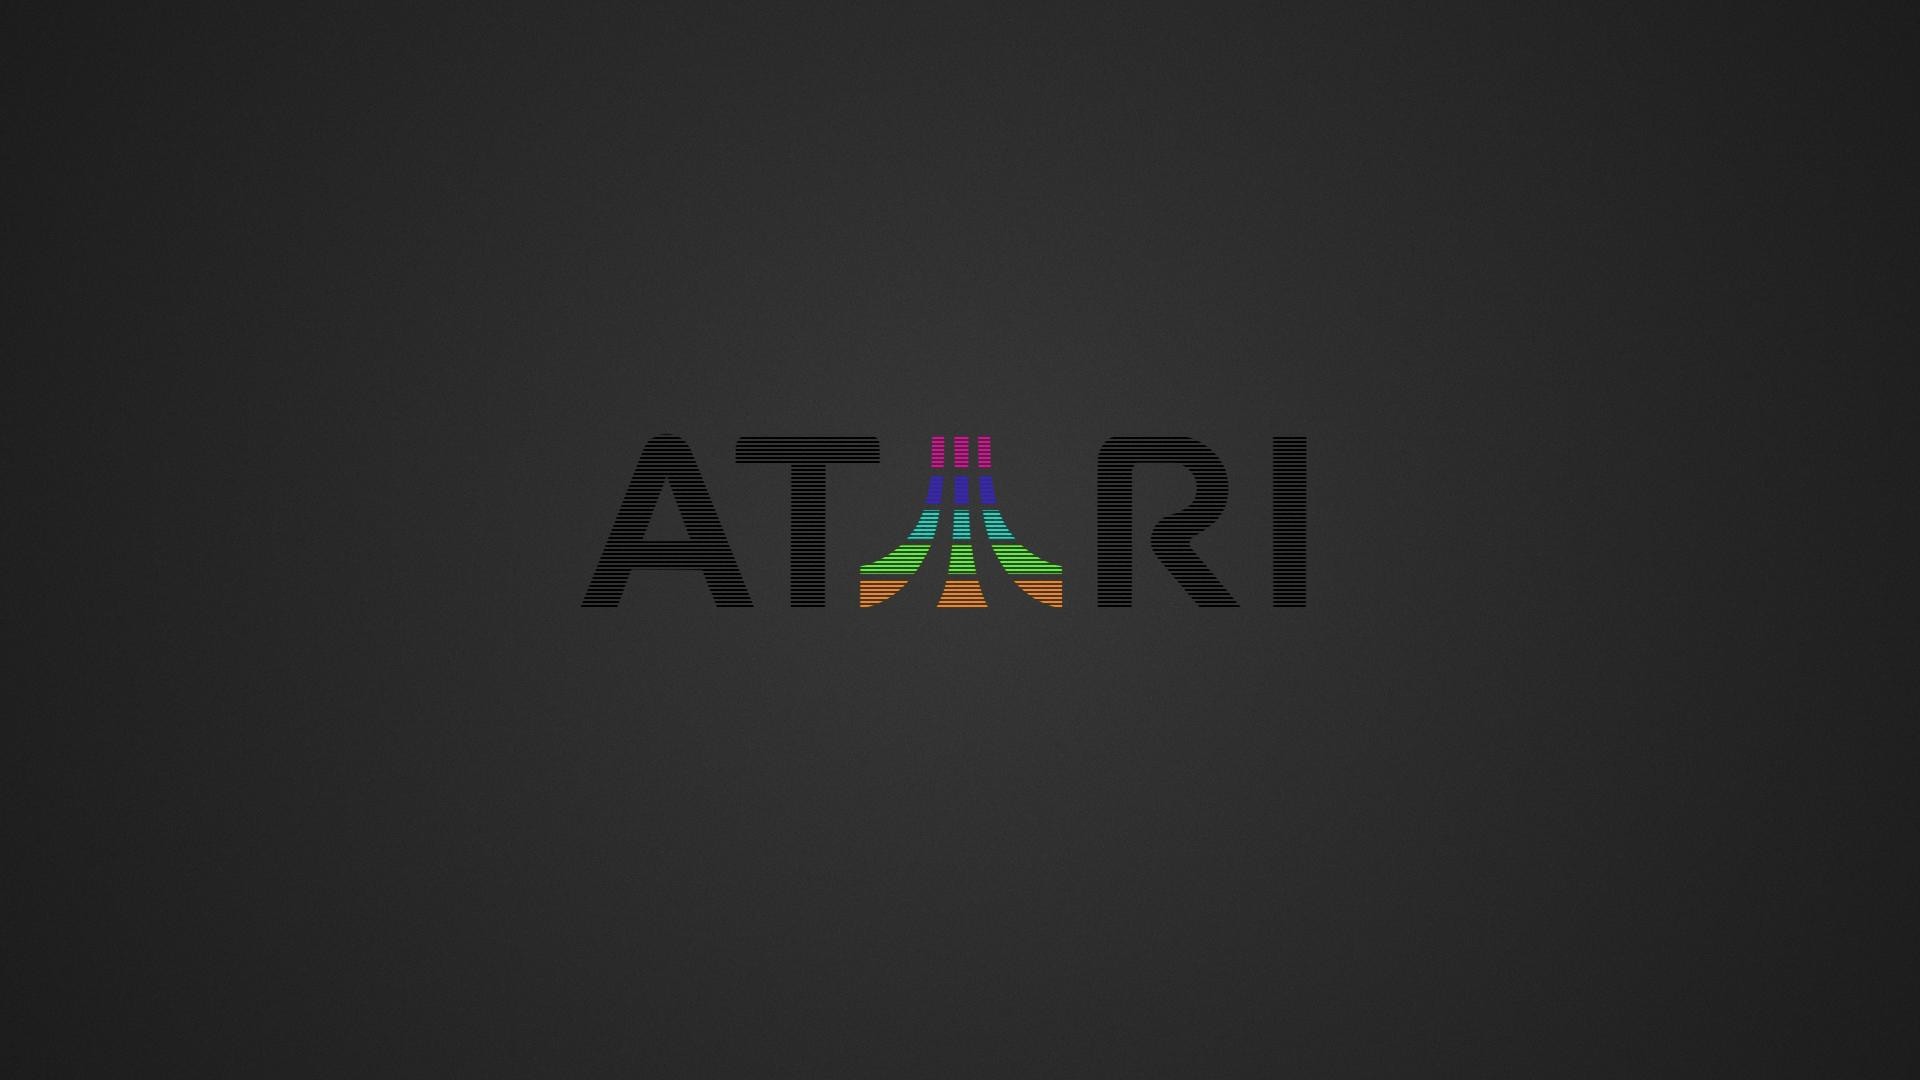 Caption Atari, gray background